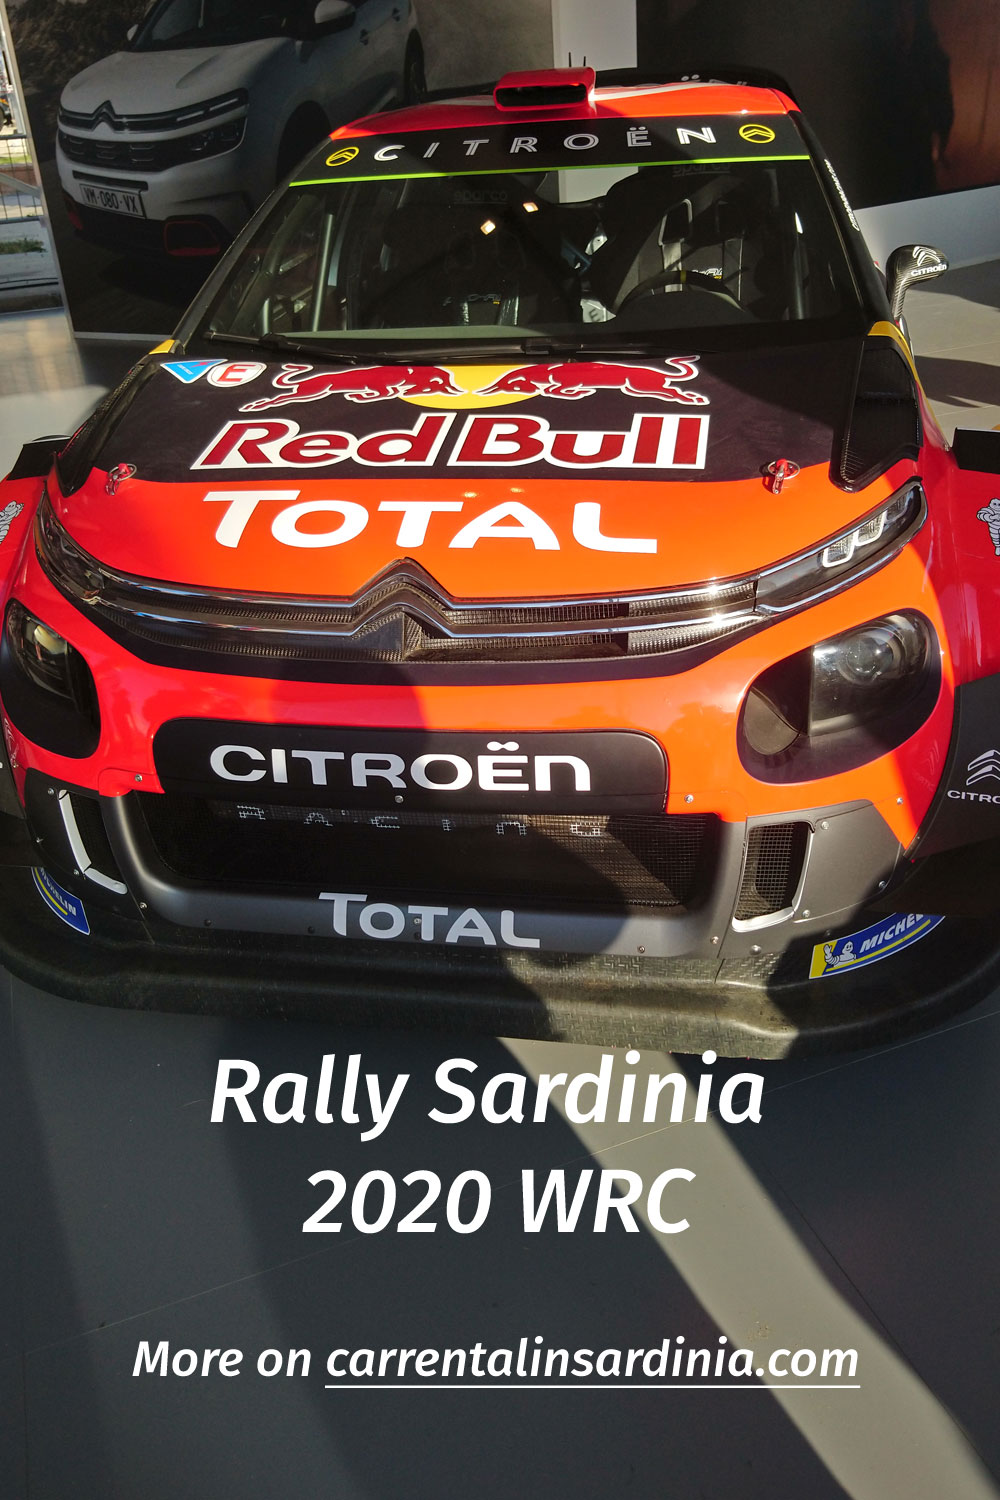 WRC 2020 Sardinia